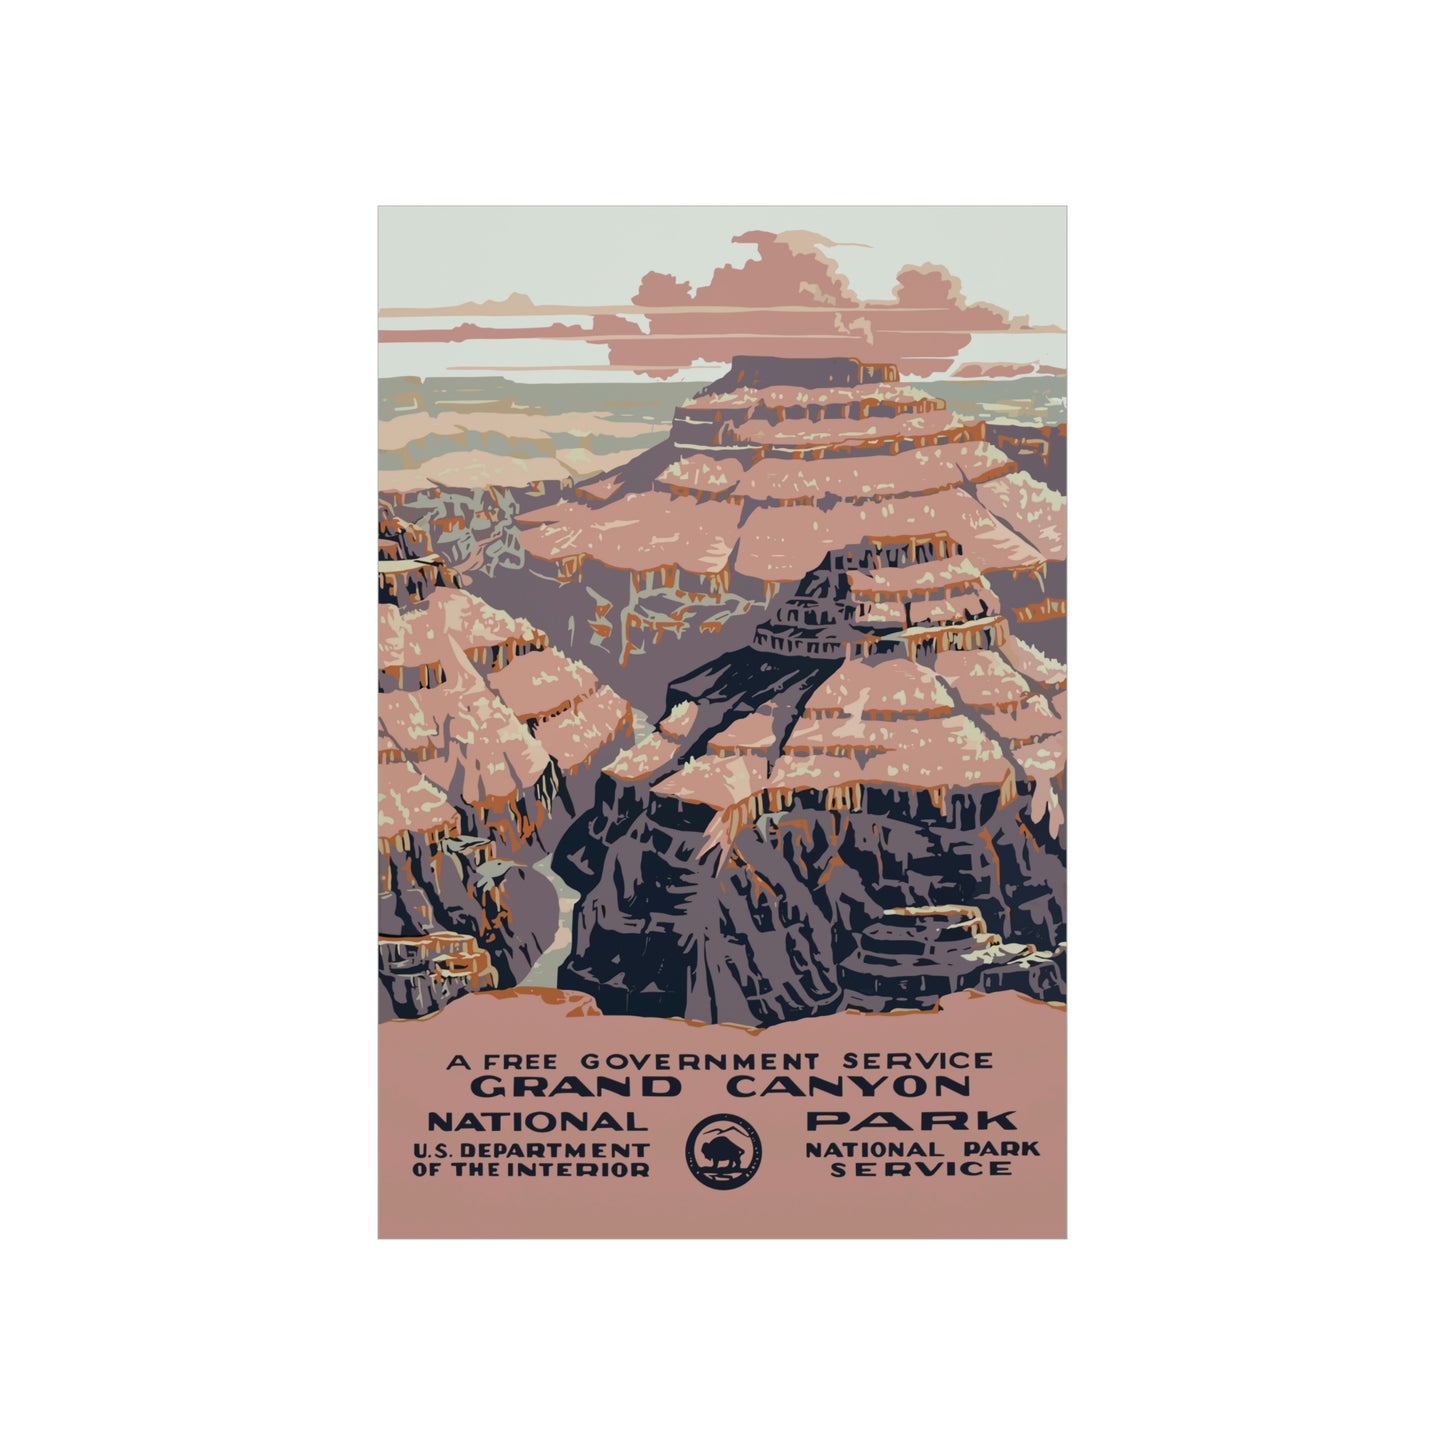 Grand Canyon National Park Poster - Vintage WPA Design